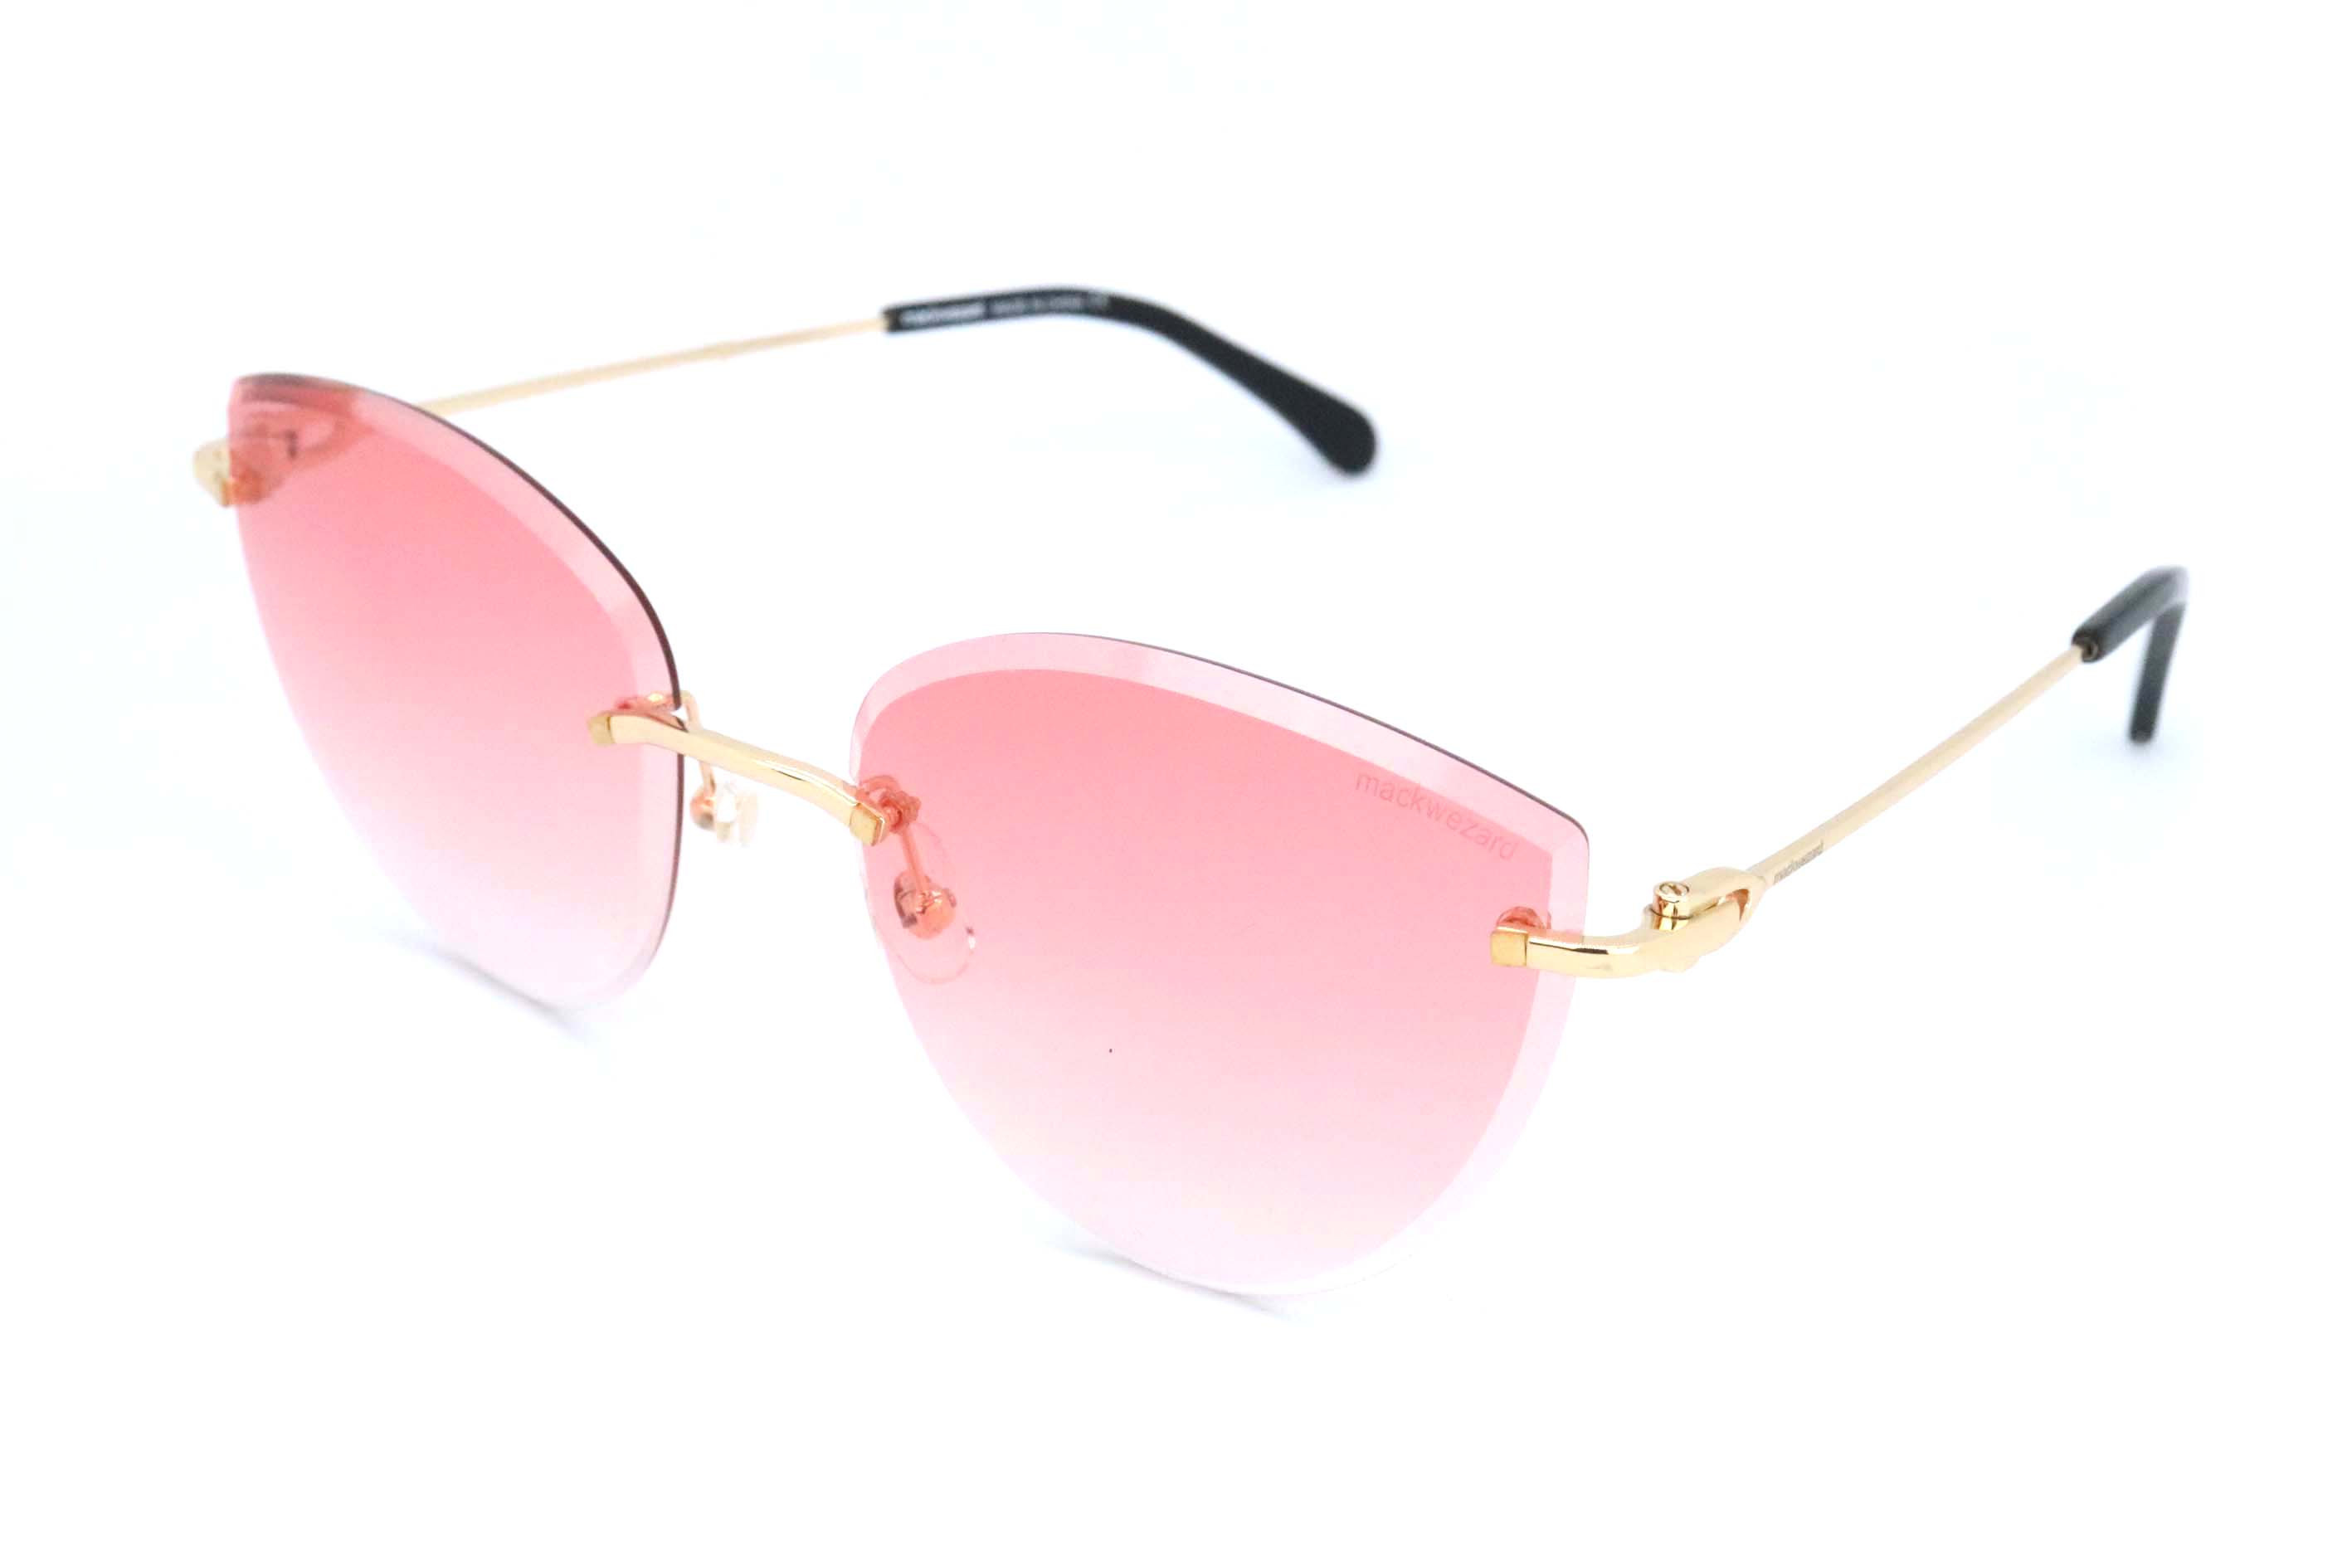  -MackWezard Sunglasses -CT003-C6-59-18-145 